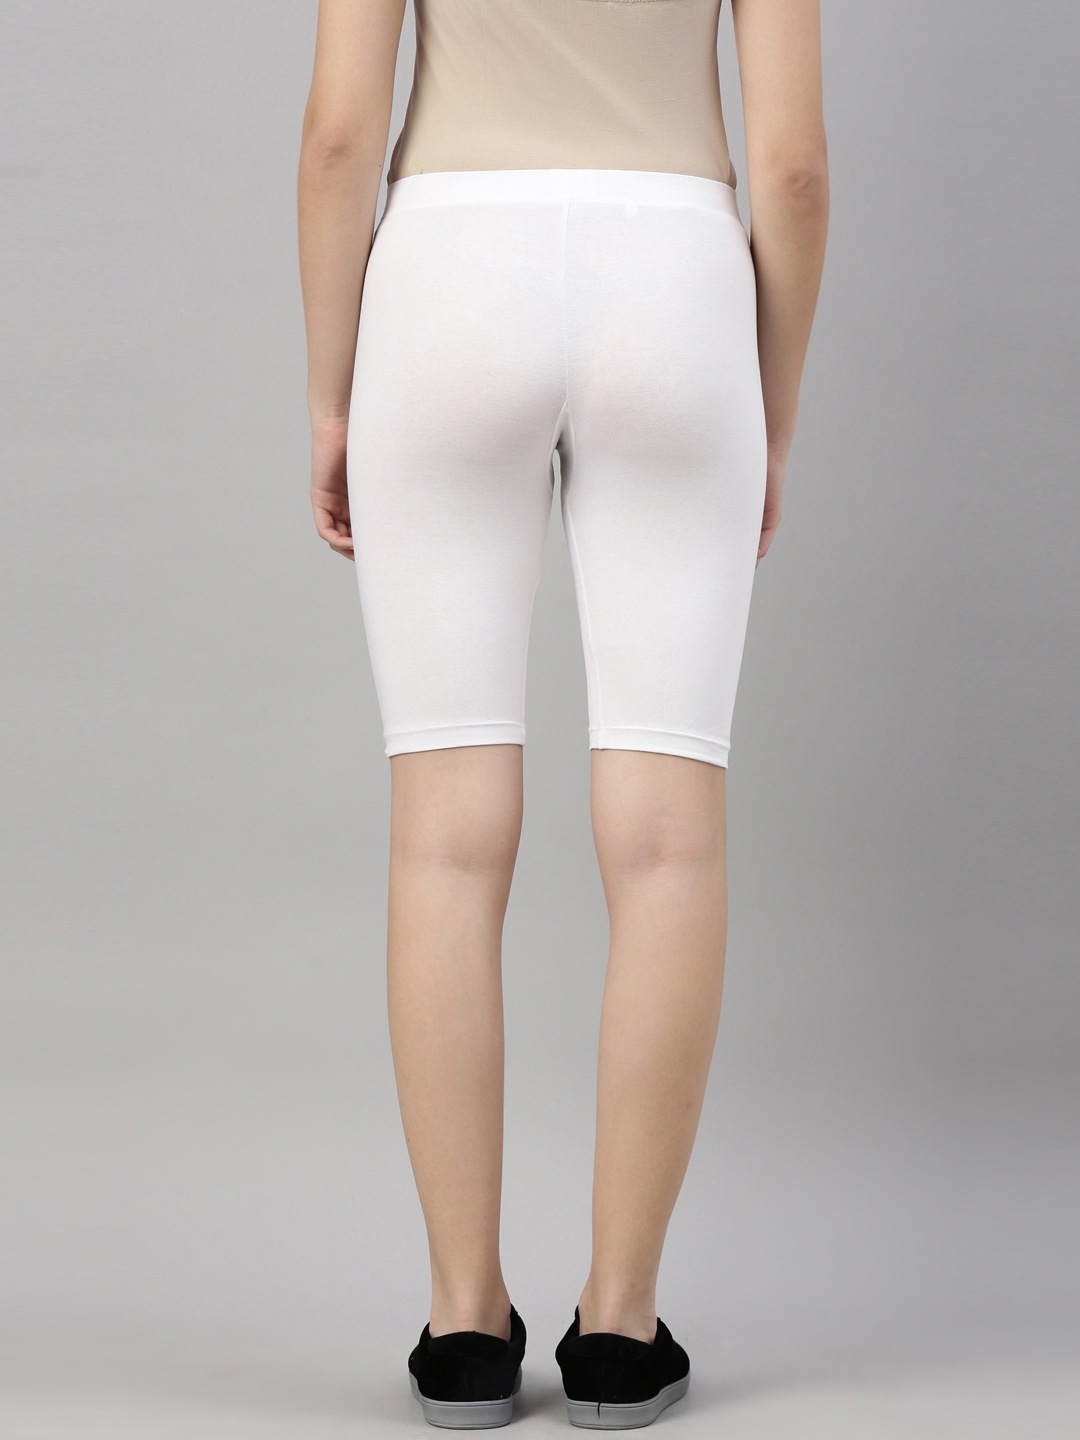 Kryptic | Kryptic Women's Cotton White Shorts 1